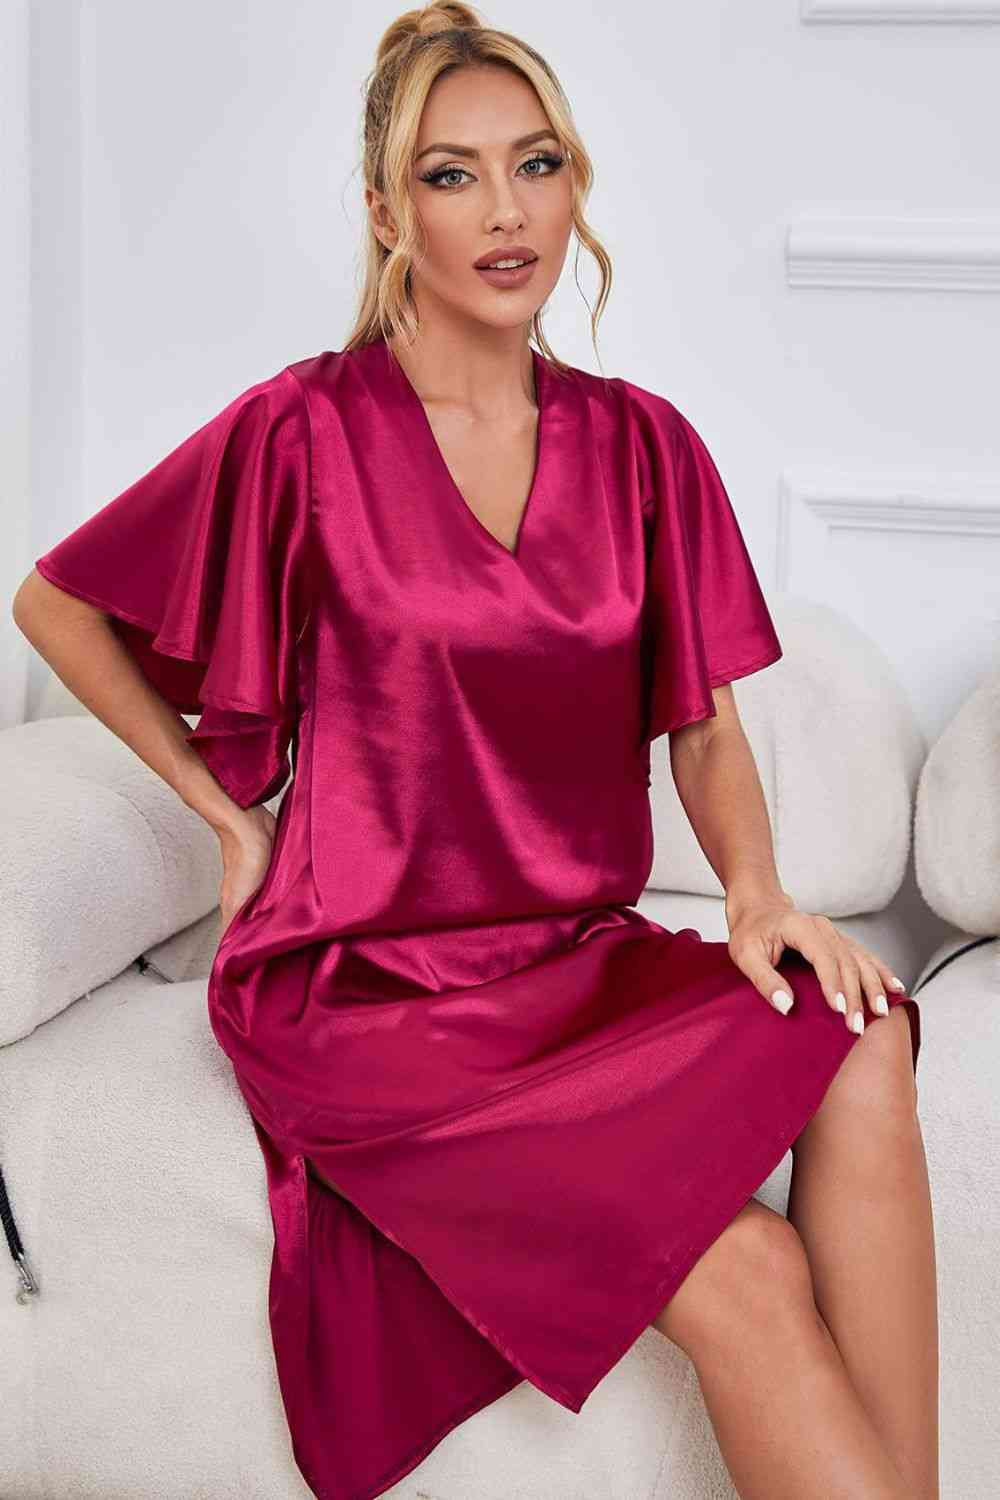 Model sitting on sofa wearing pink knee length nightgown